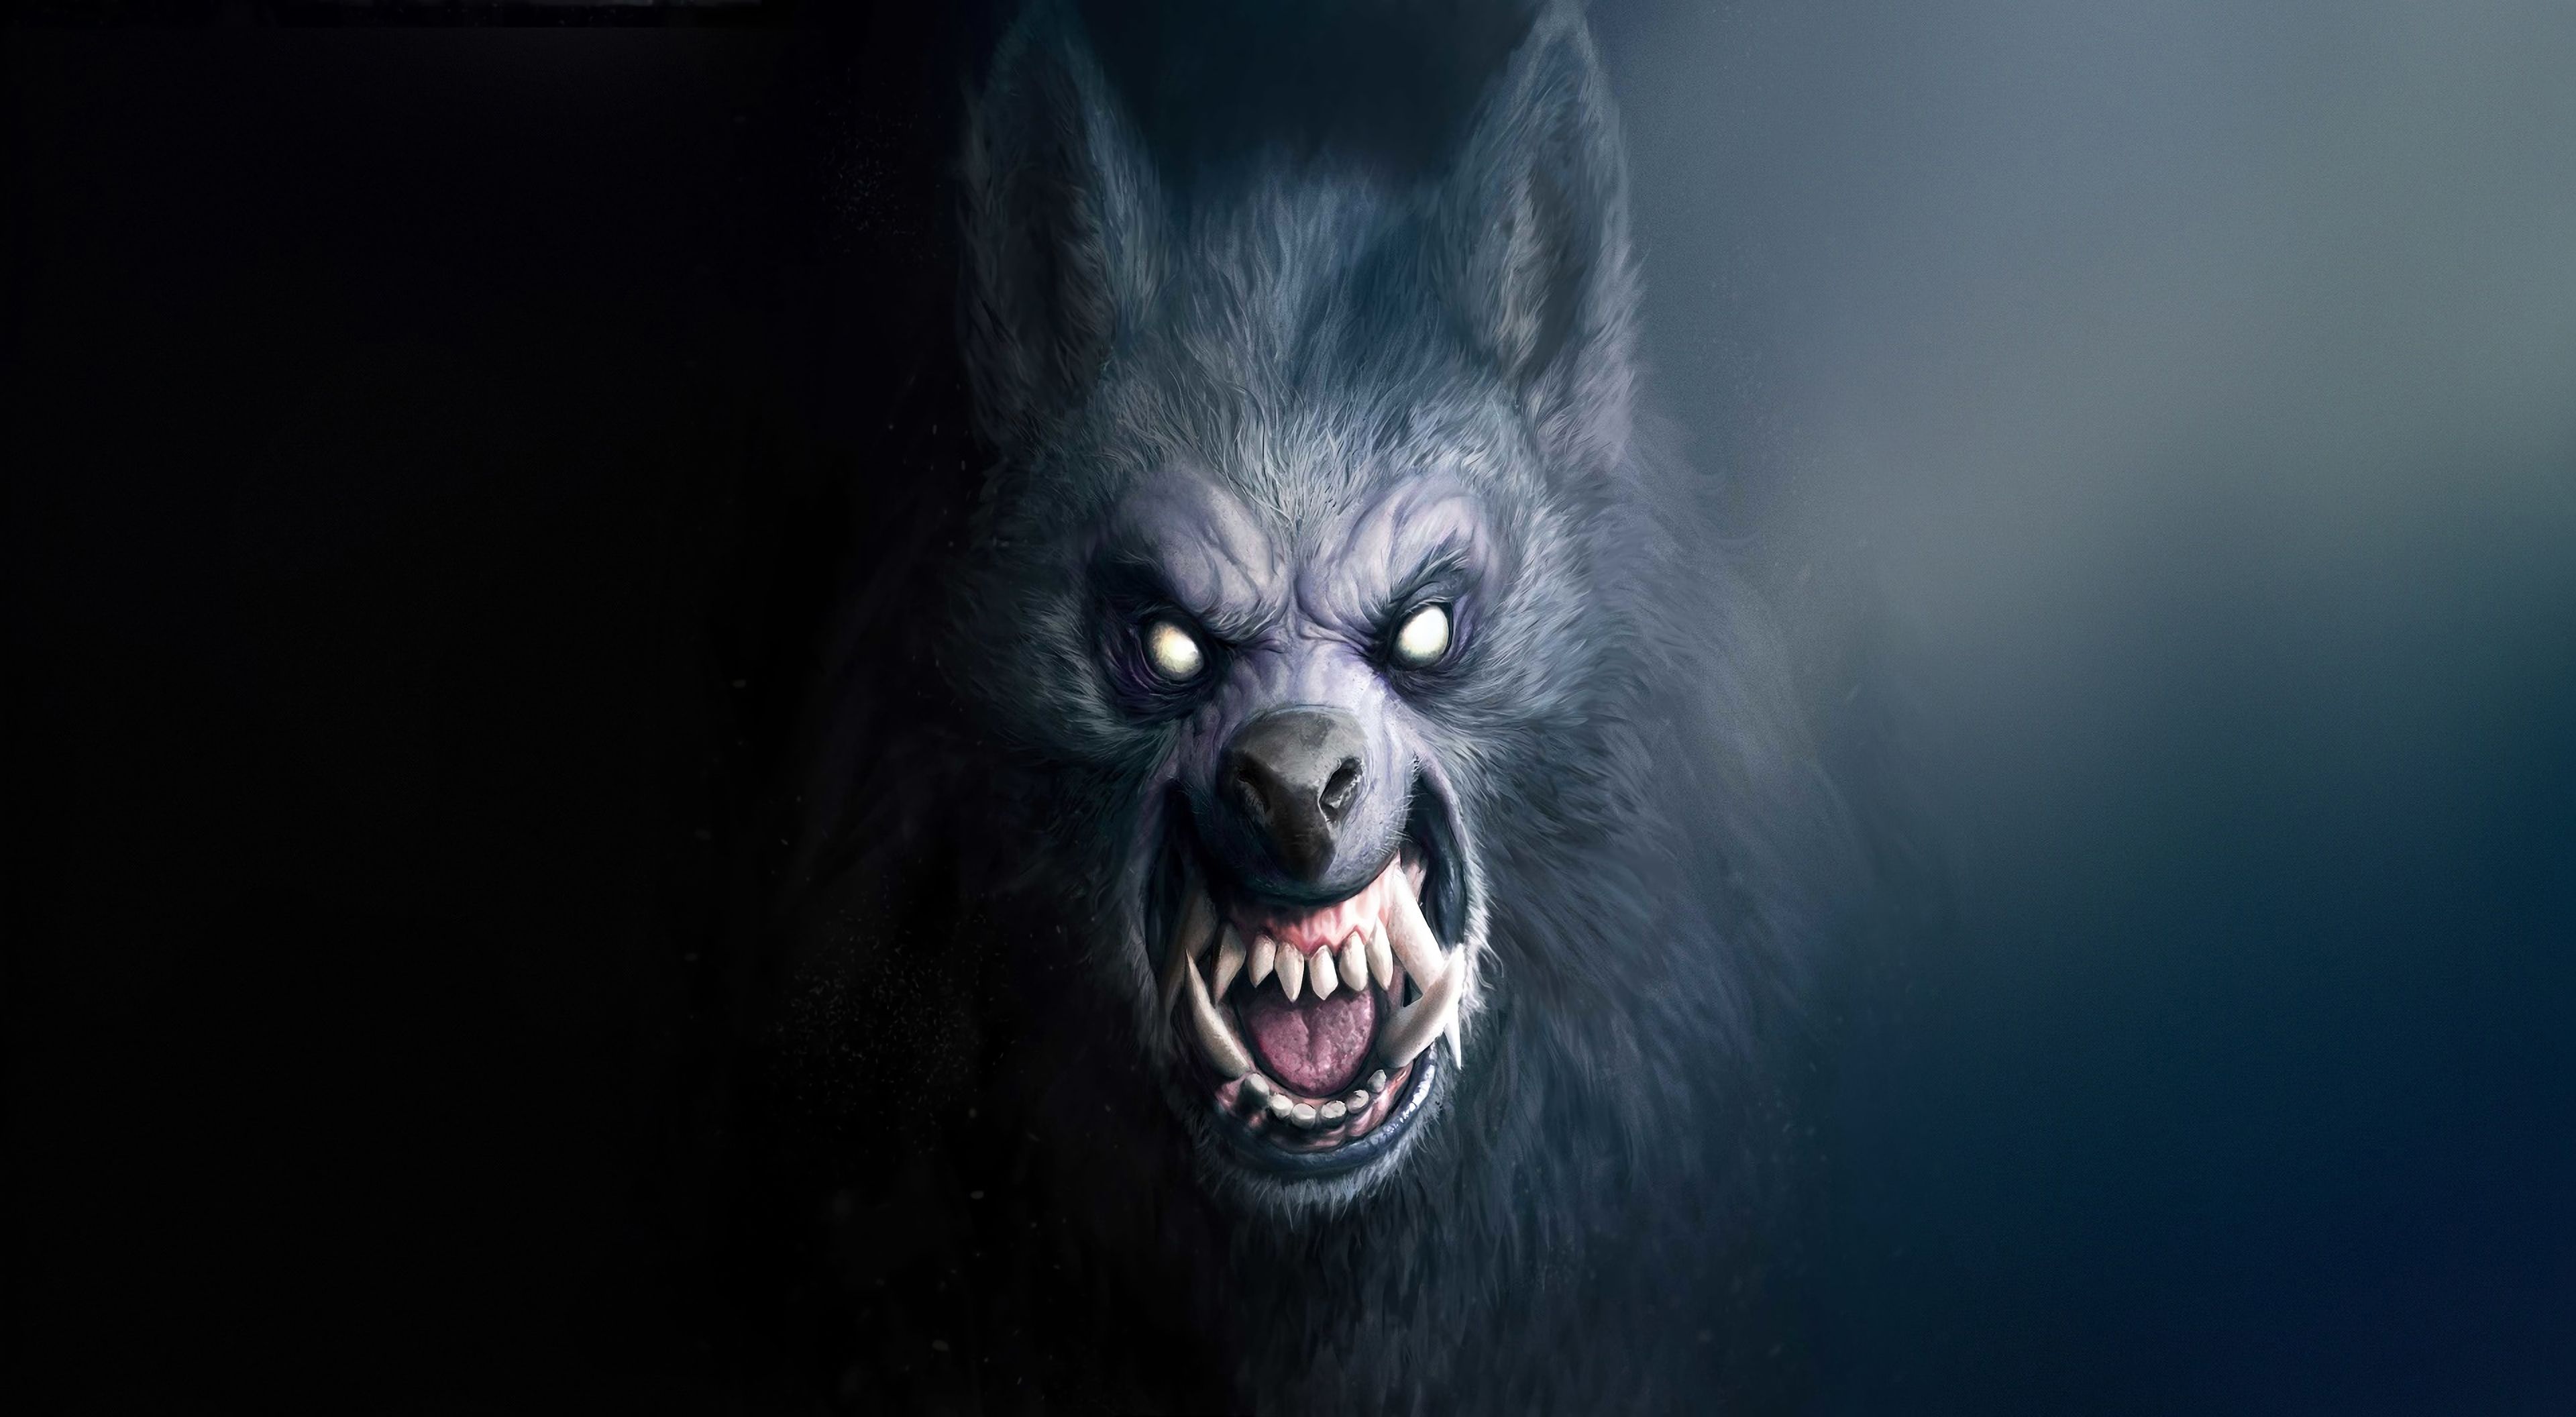 Werewolf 4k, HD Artist, 4k Wallpaper, Image, Background, Photo and Picture